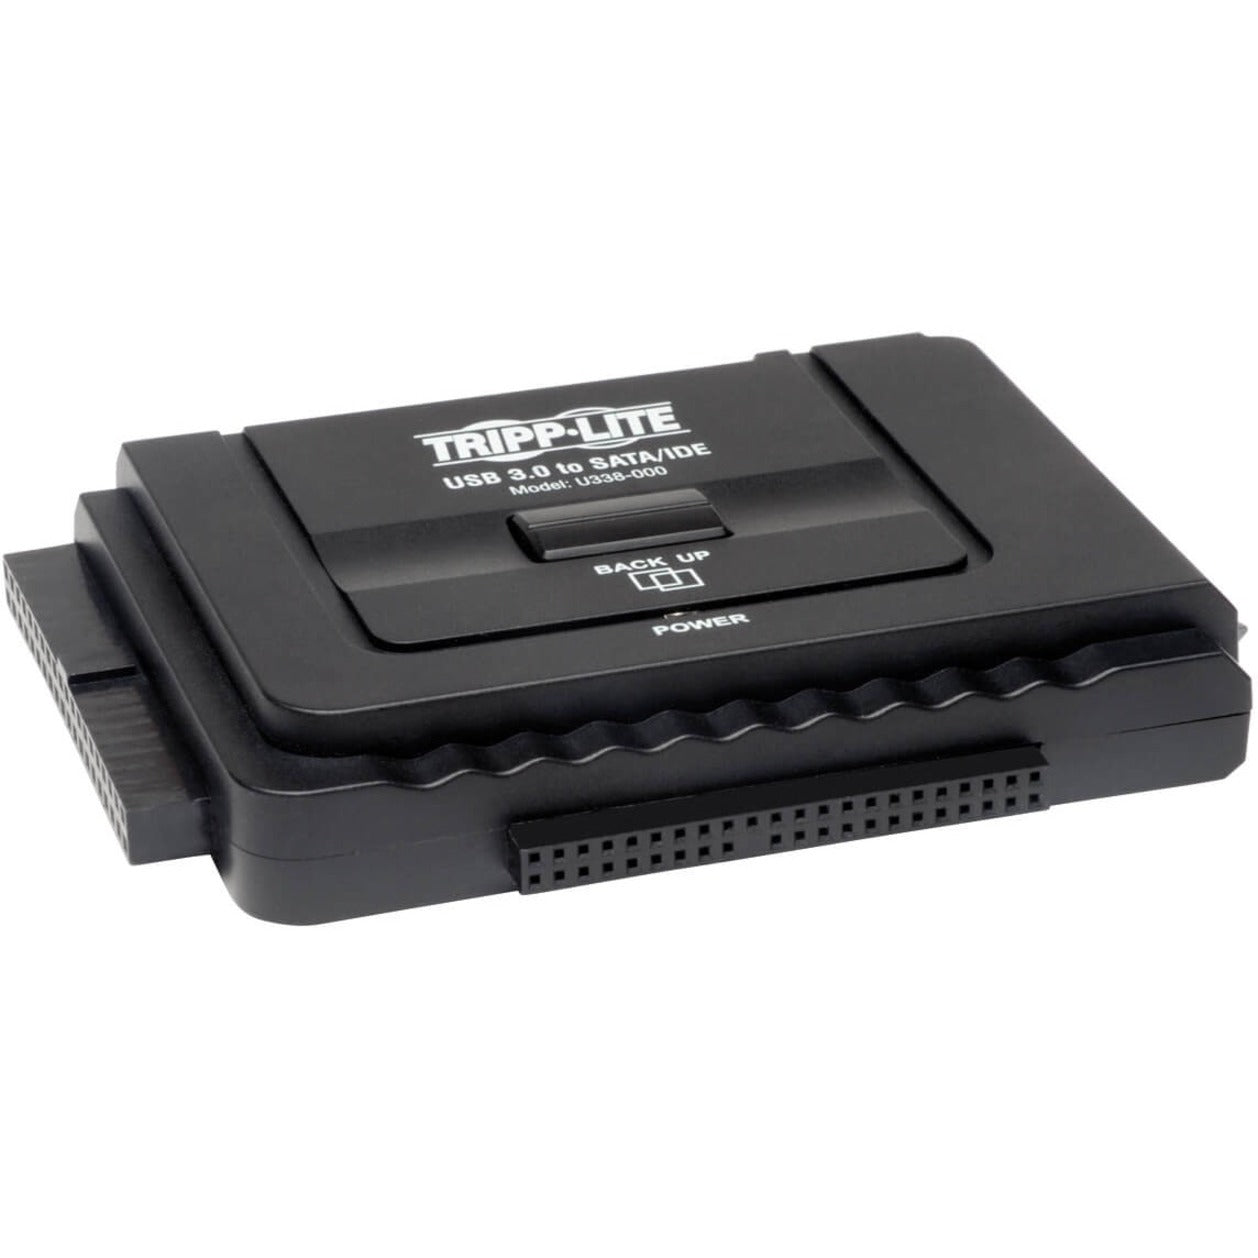 Tripp Lite U338-000 USB 3.0 to SATA / IDE Combo Adapter, Data Transfer Adapter